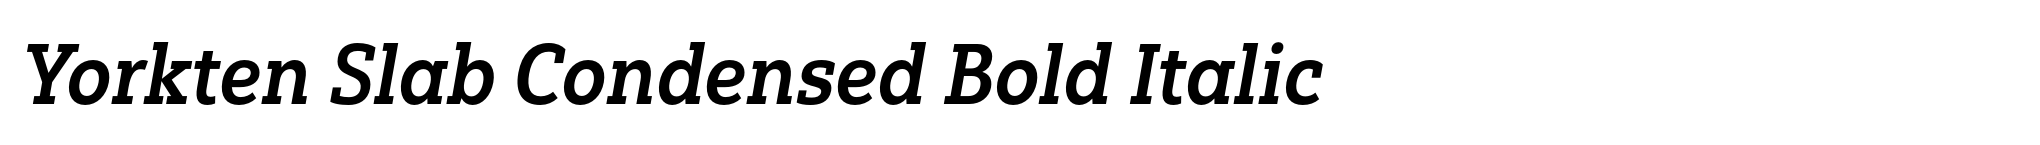 Yorkten Slab Condensed Bold Italic image